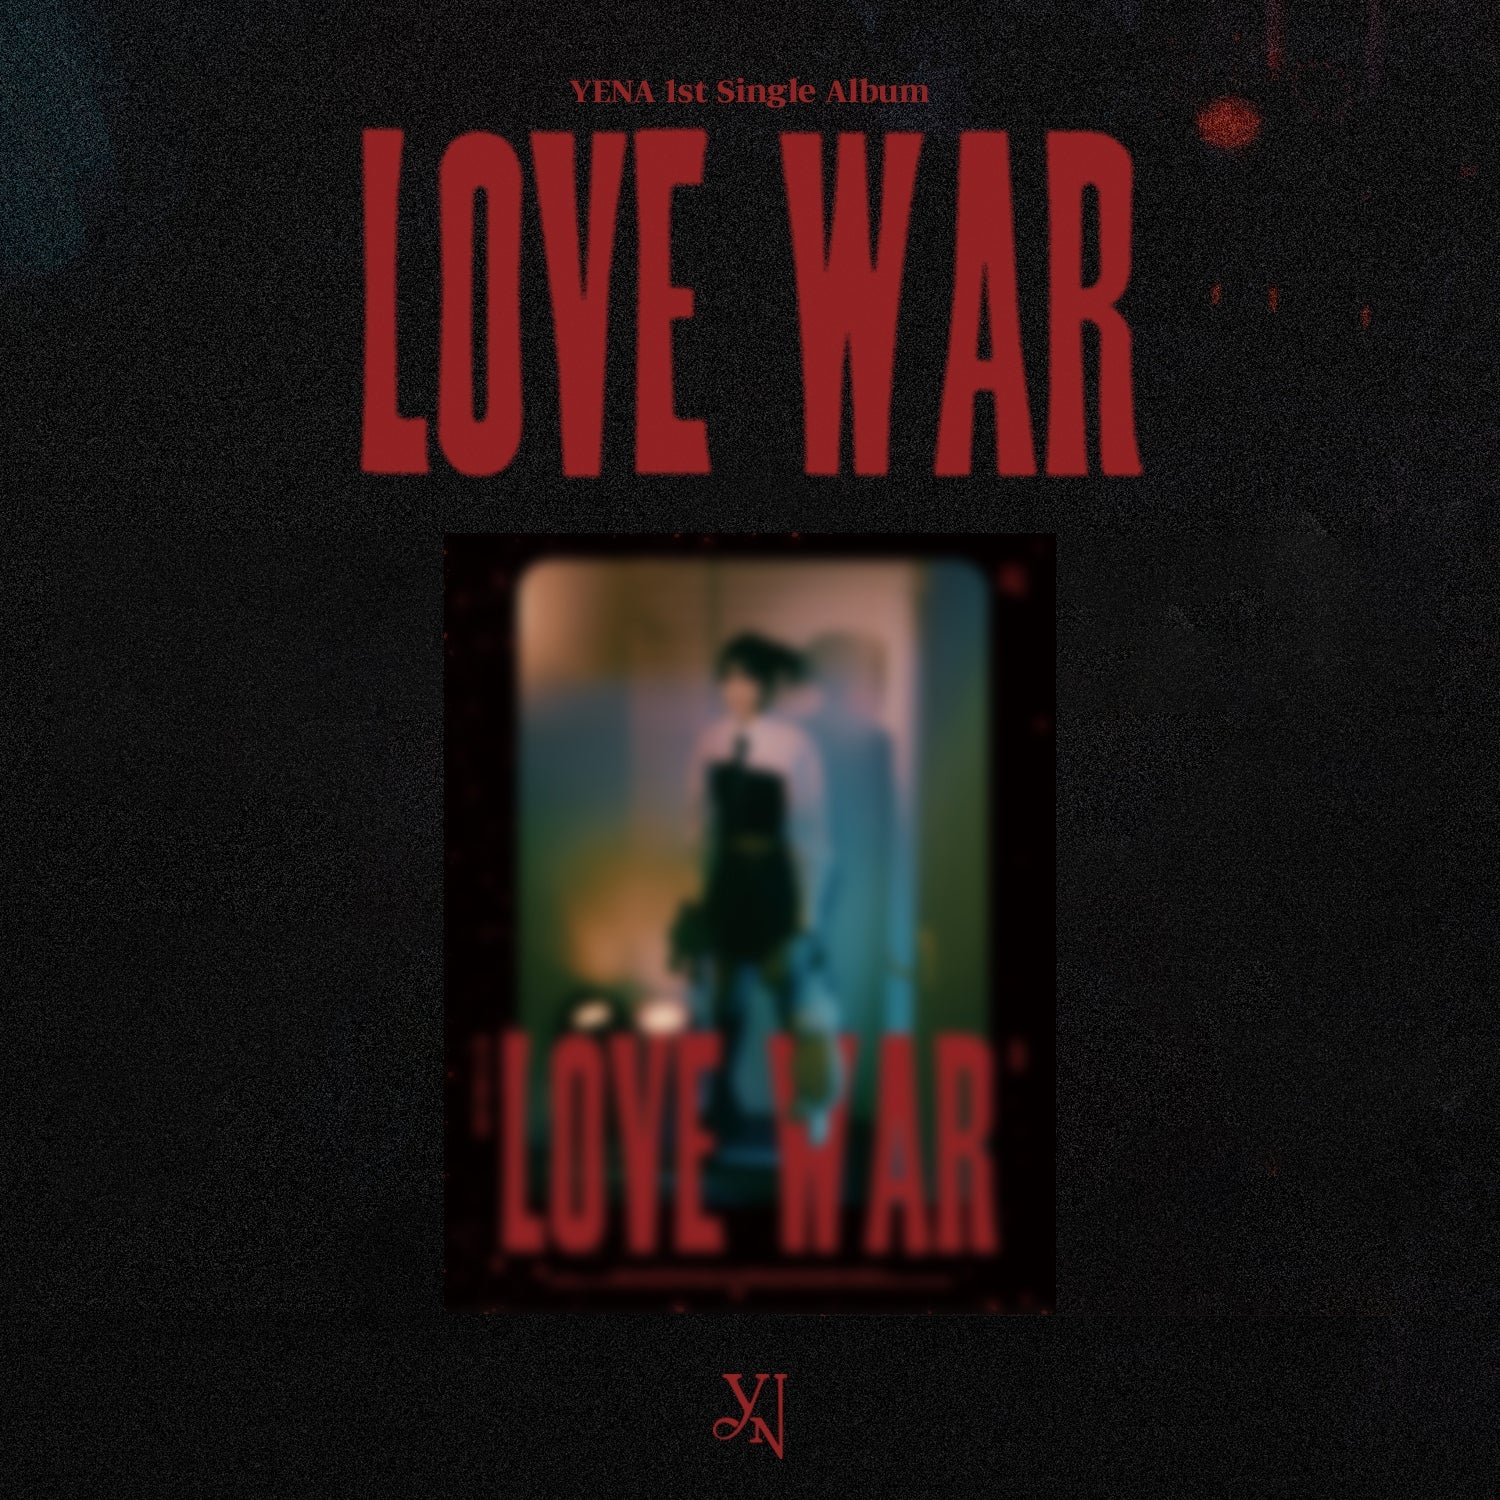 YENA 1ST SINGLE ALBUM 'LOVE WAR' WAR VERSION COVER